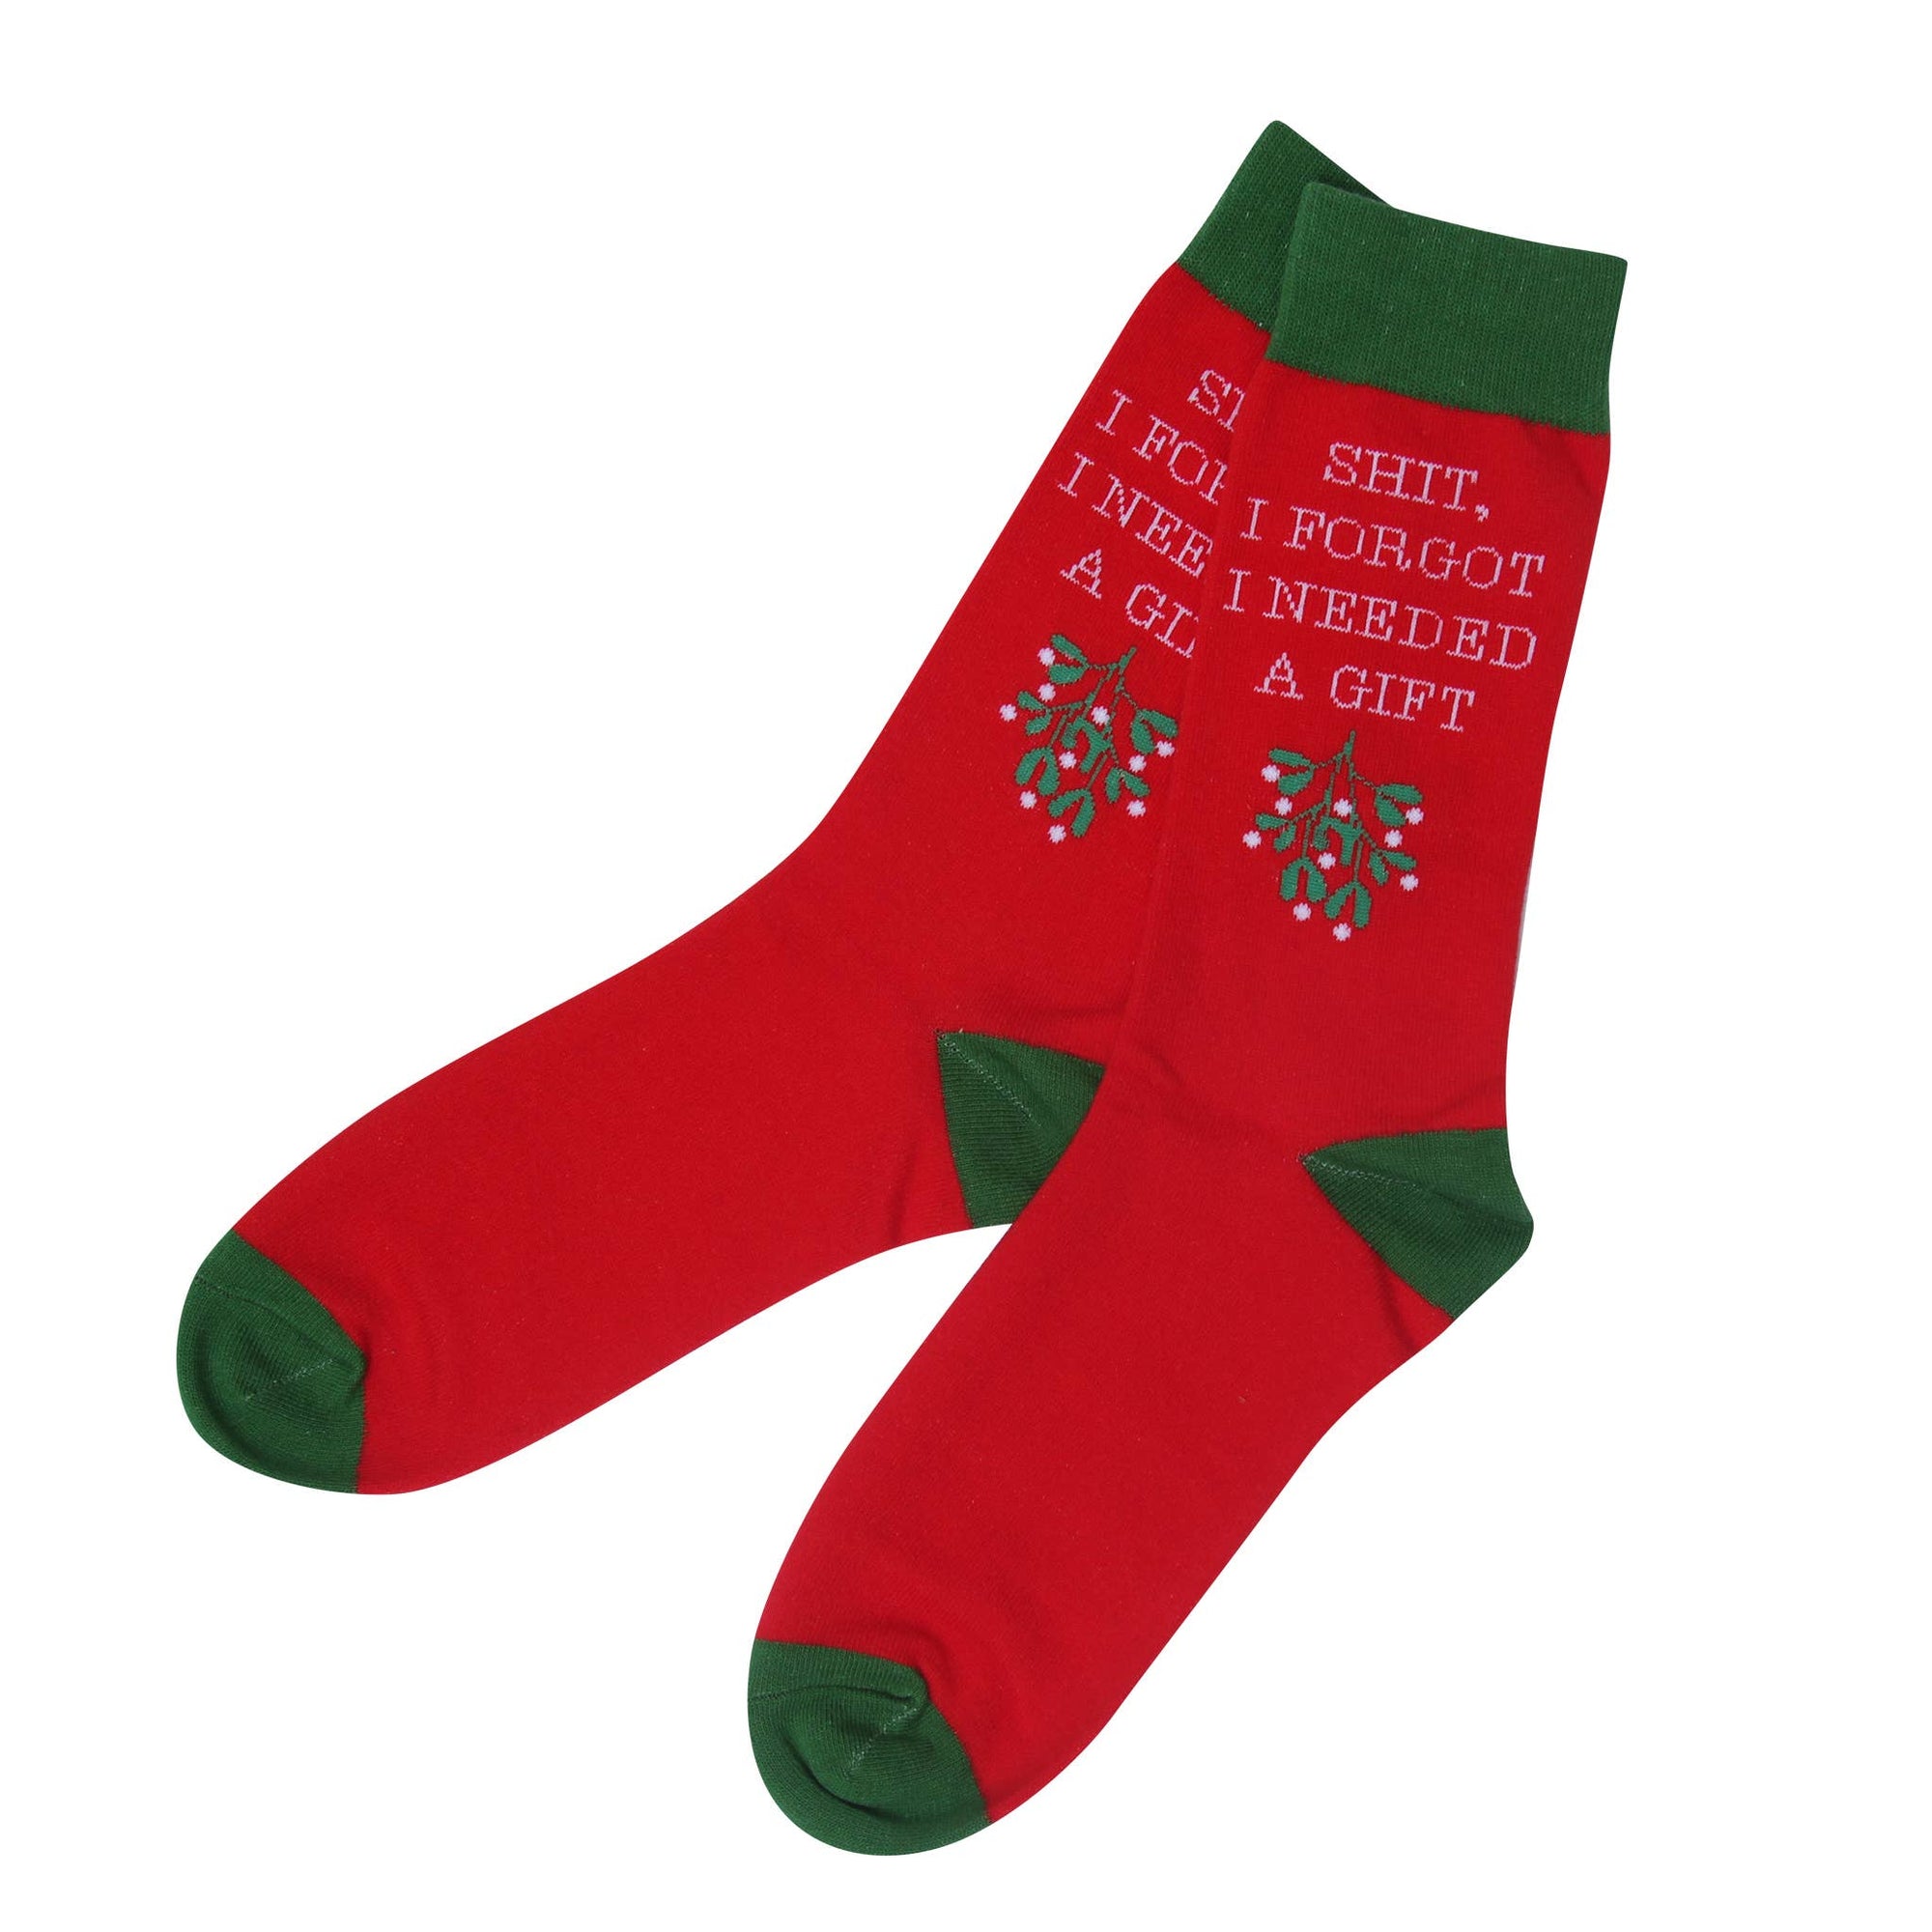 Shit I Forgot I Needed A Gift Christmas Socks